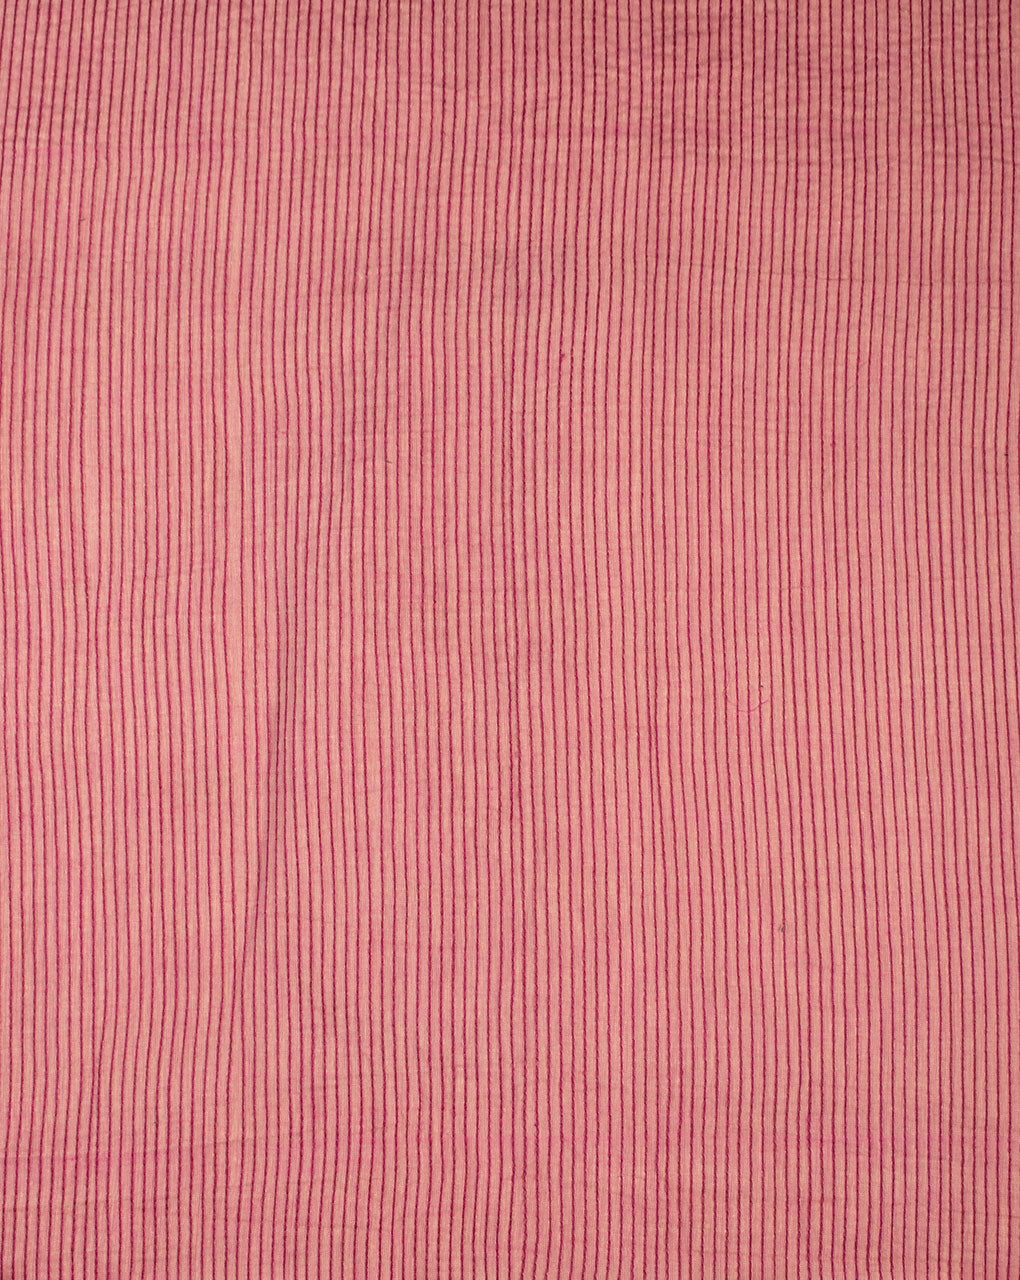 Pink Smoking Stitched Cotton Fabric - Fabriclore.com